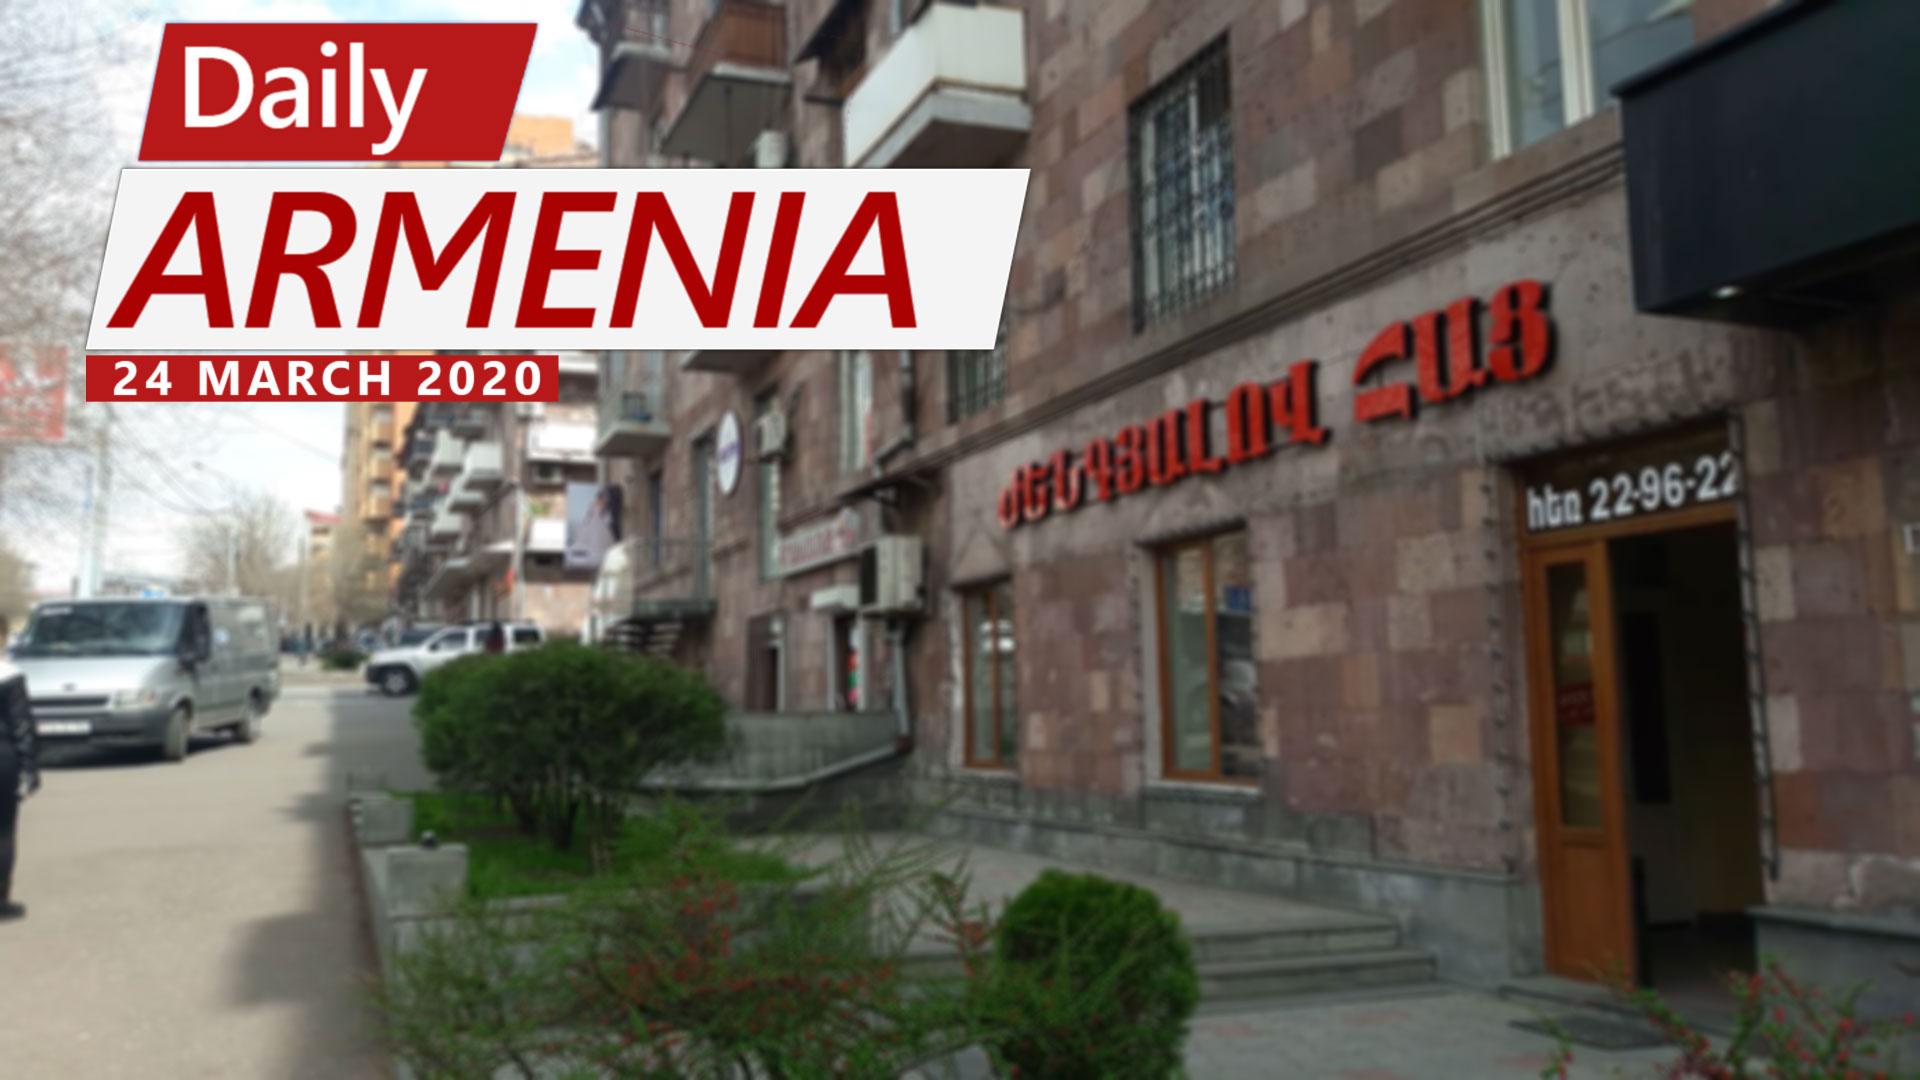 Armenia Goes into Lockdown